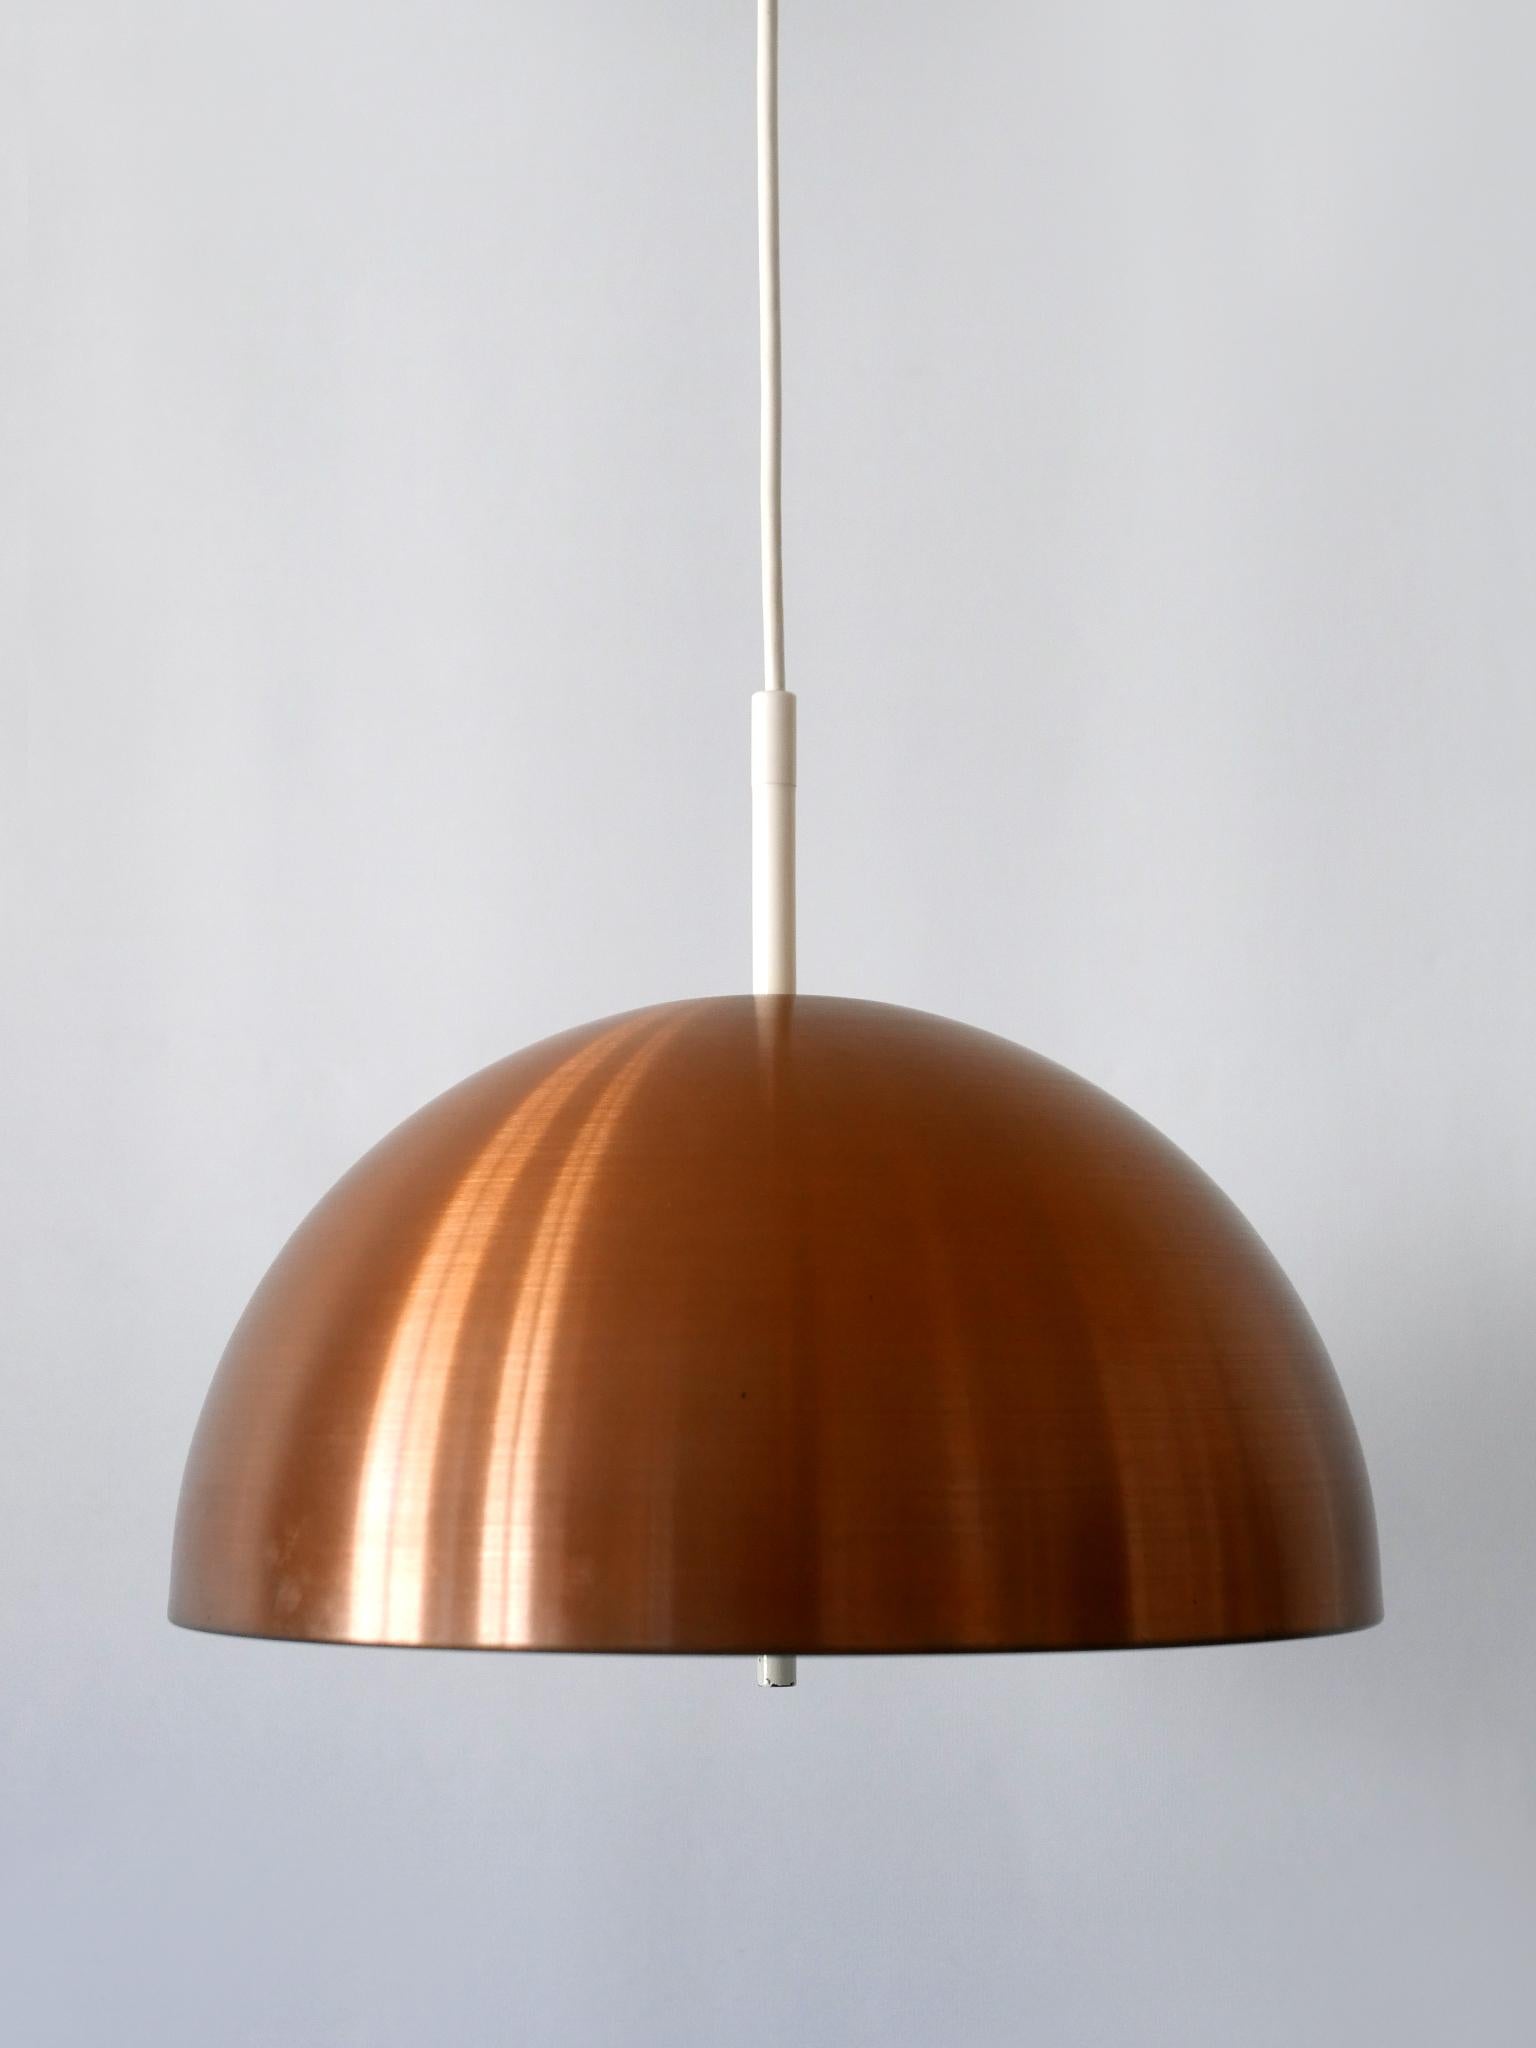 Elegant Mid-Century Modern Copper Pendant Lamp by Staff & Schwarz Germany, 1960s For Sale 5